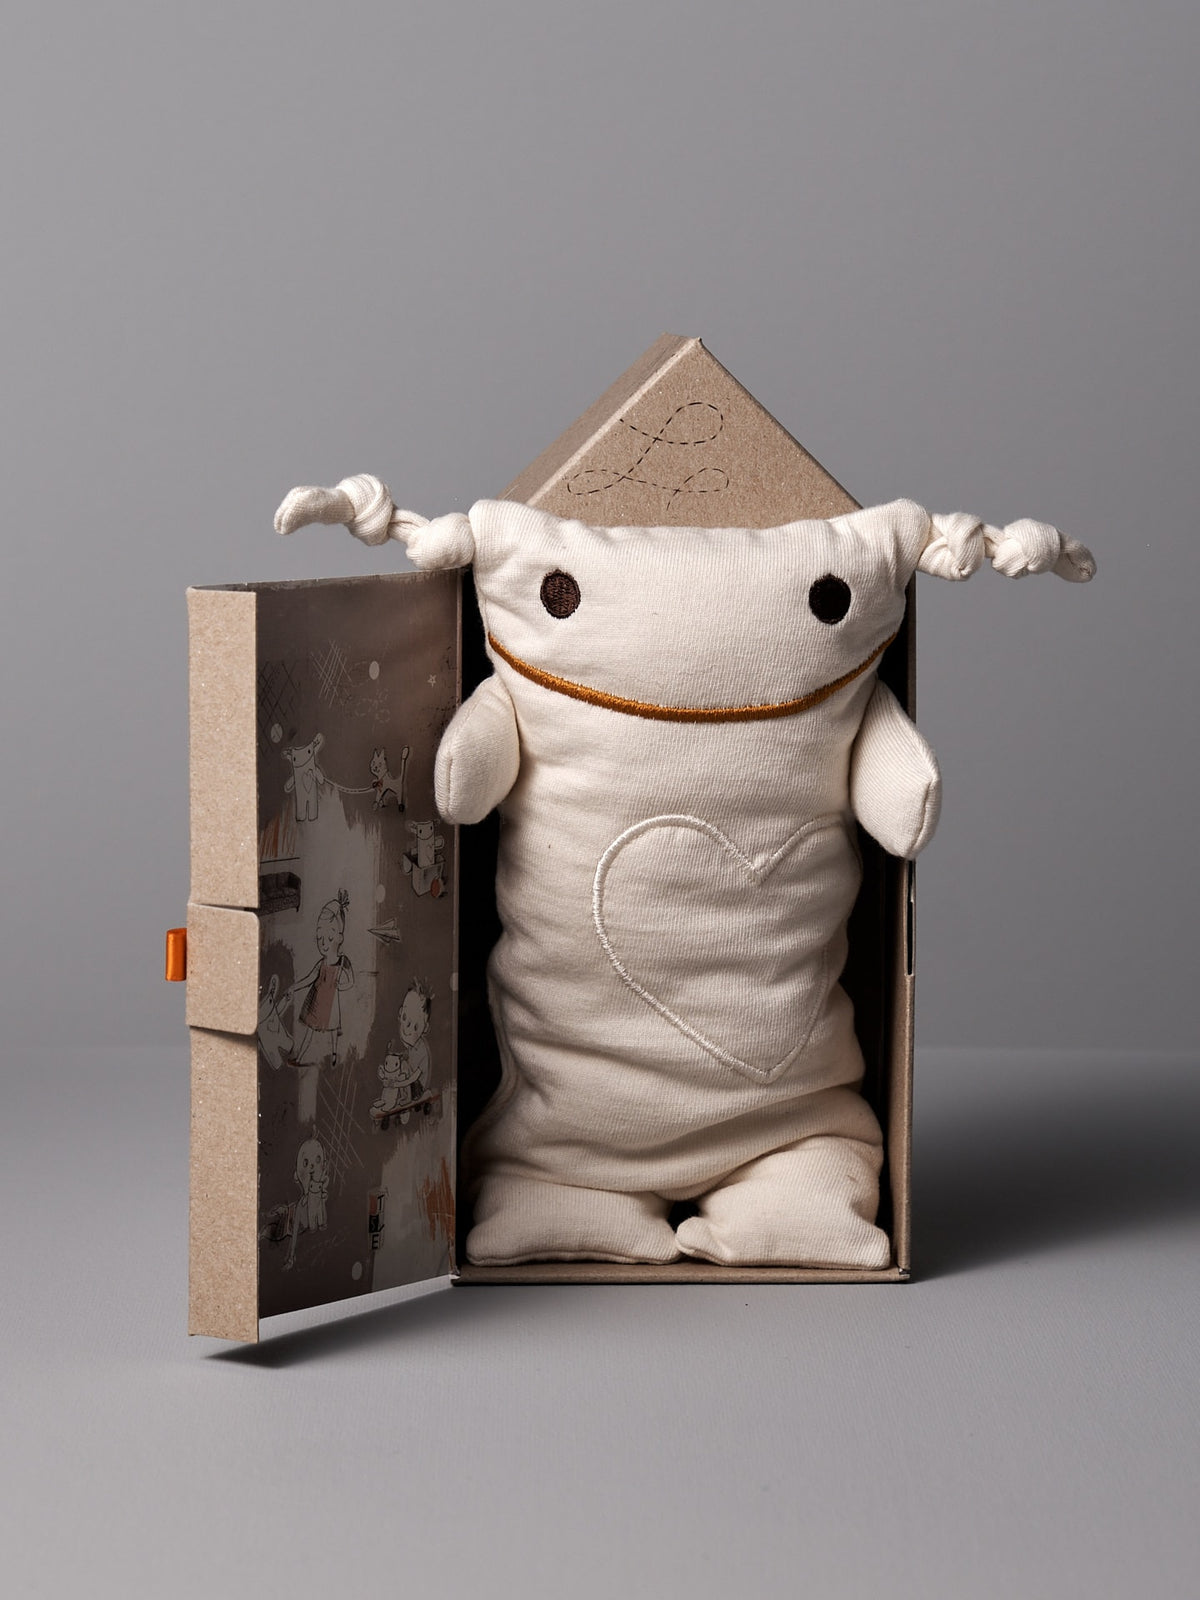 A Monsieur Tsé-Tsé Classic stuffed animal in a box by Raplapla.